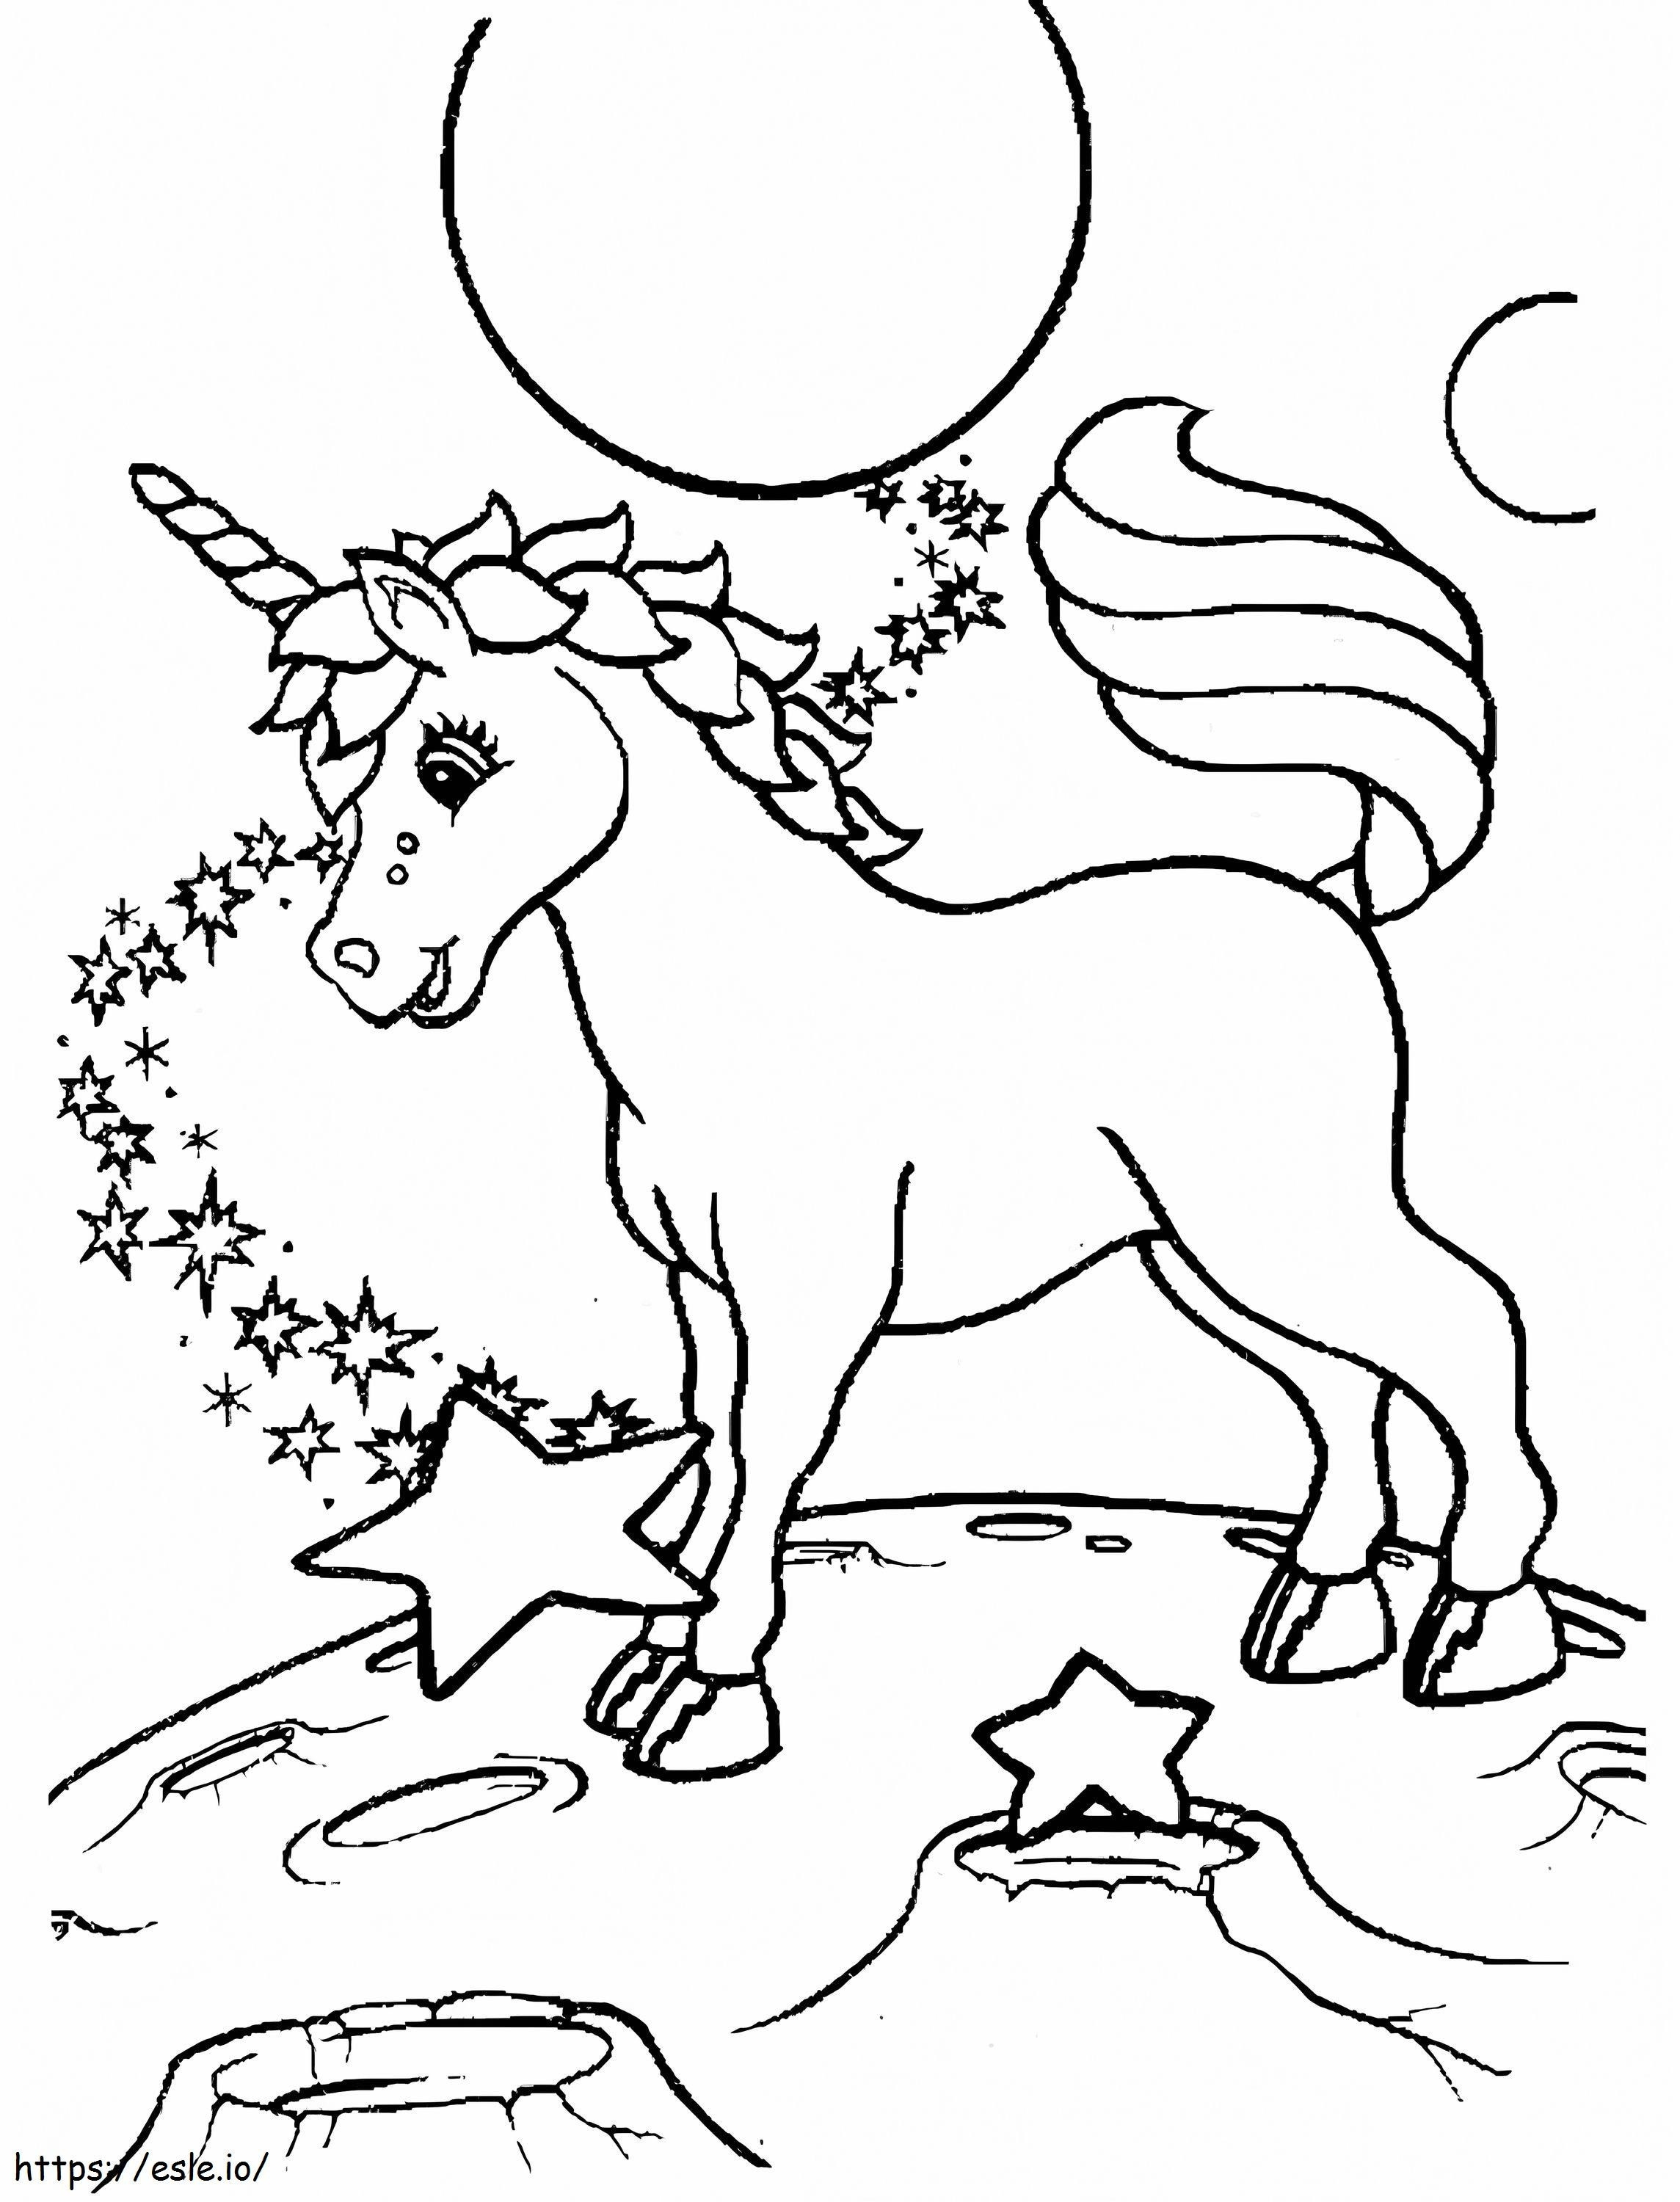  Lisa Frank A4'te Unicorn boyama